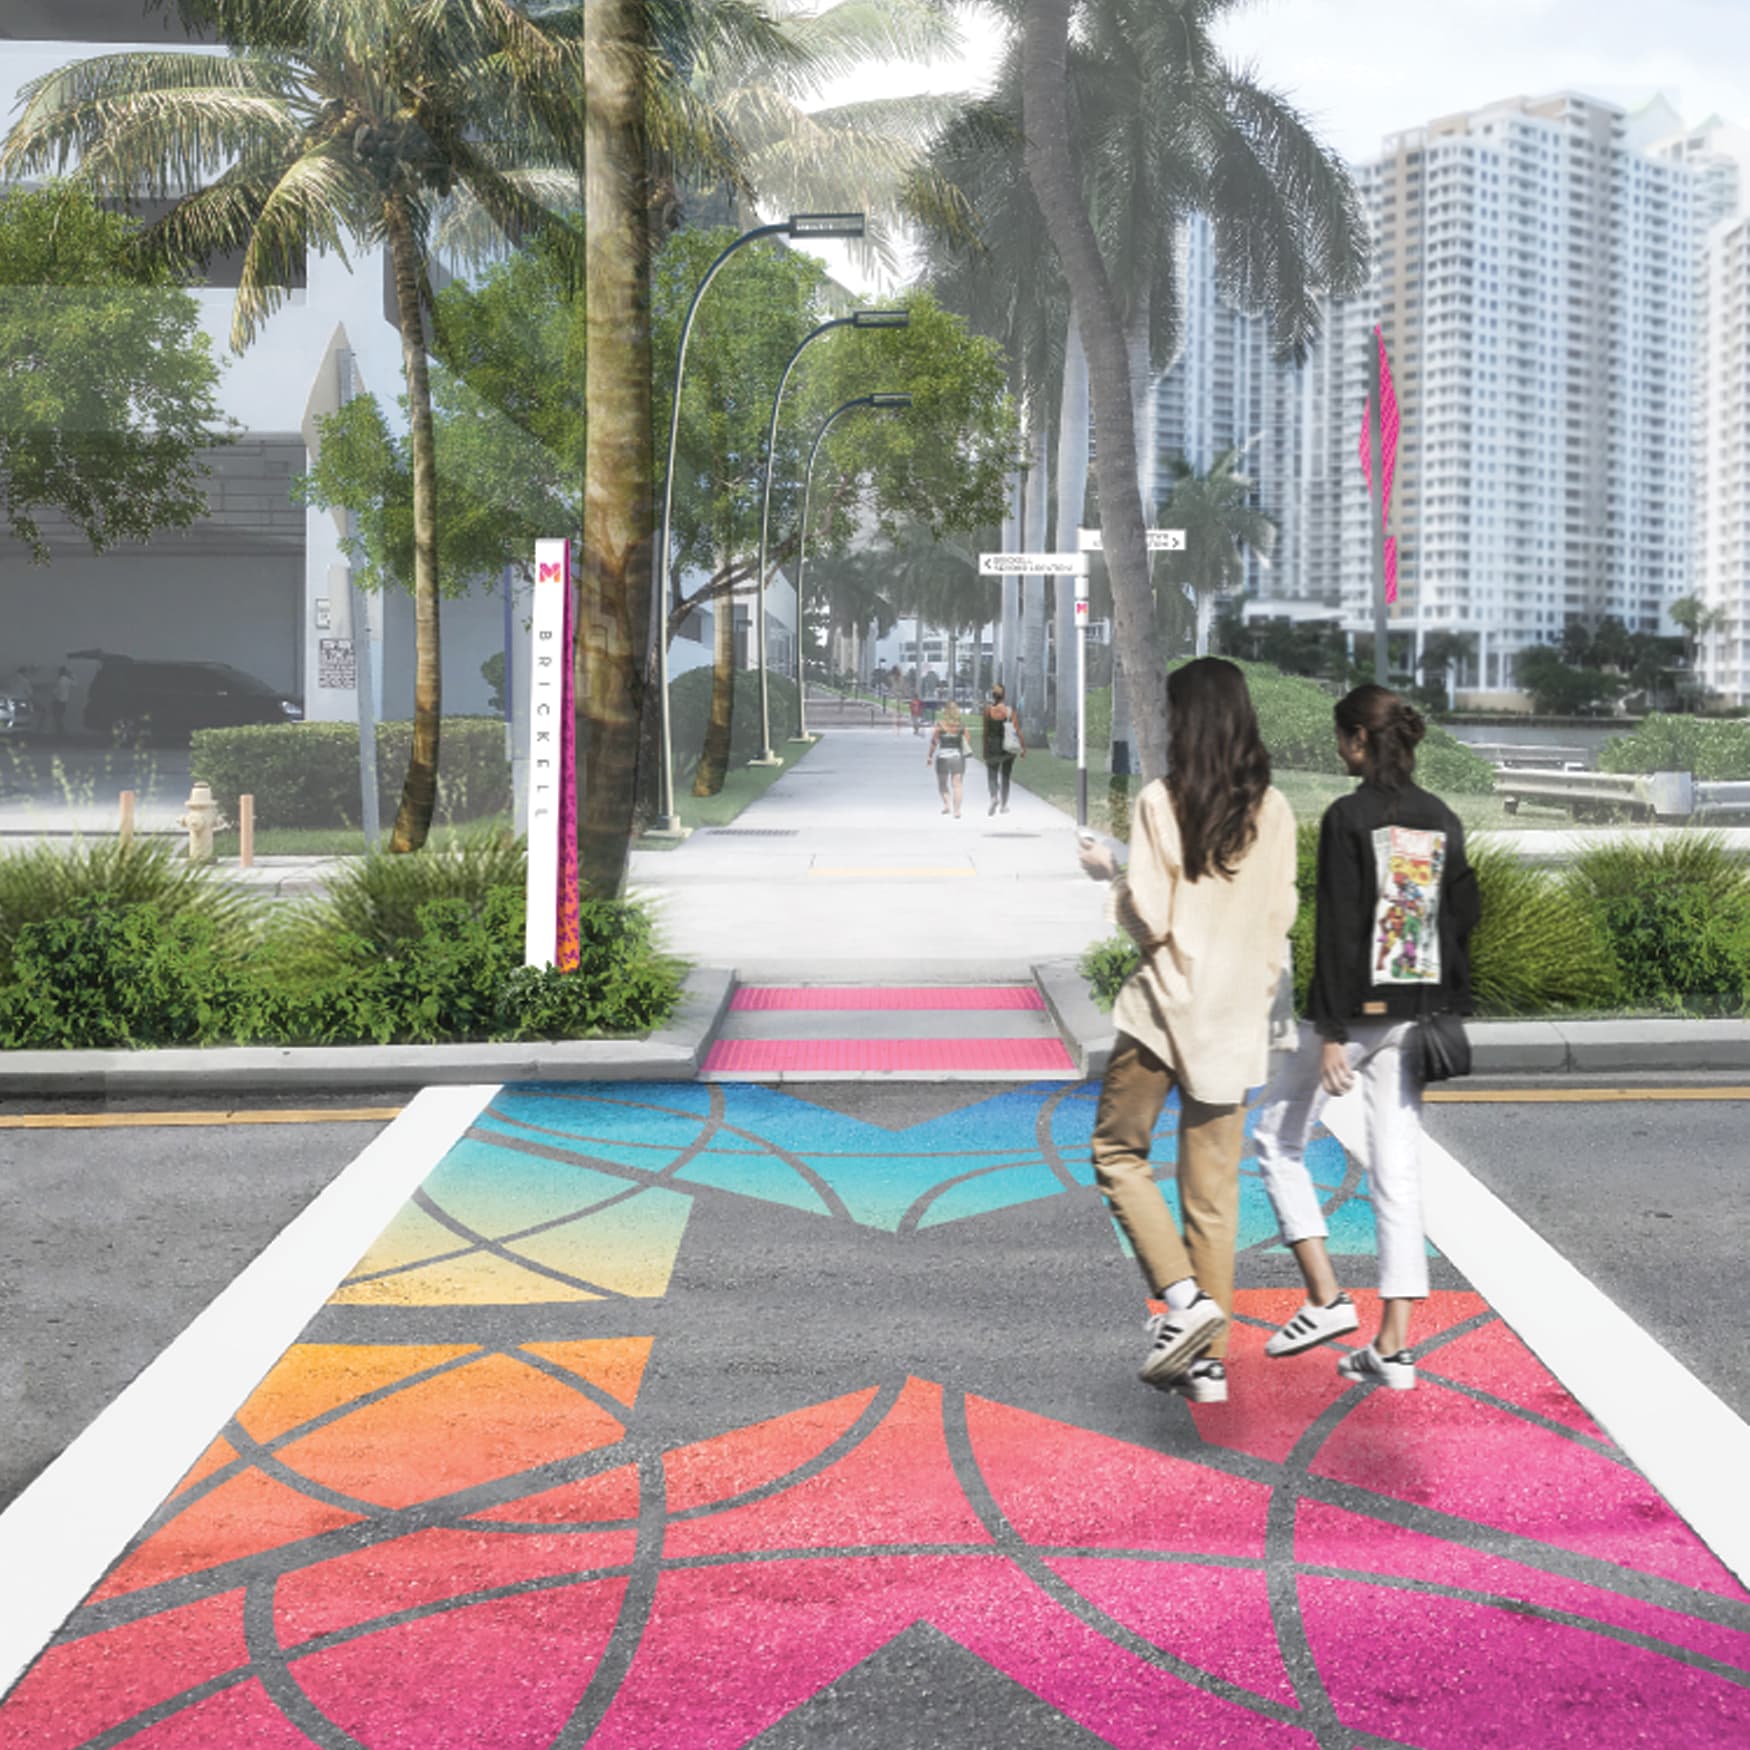 Miami Baywalk Waterfront Design and Crosswalk Design